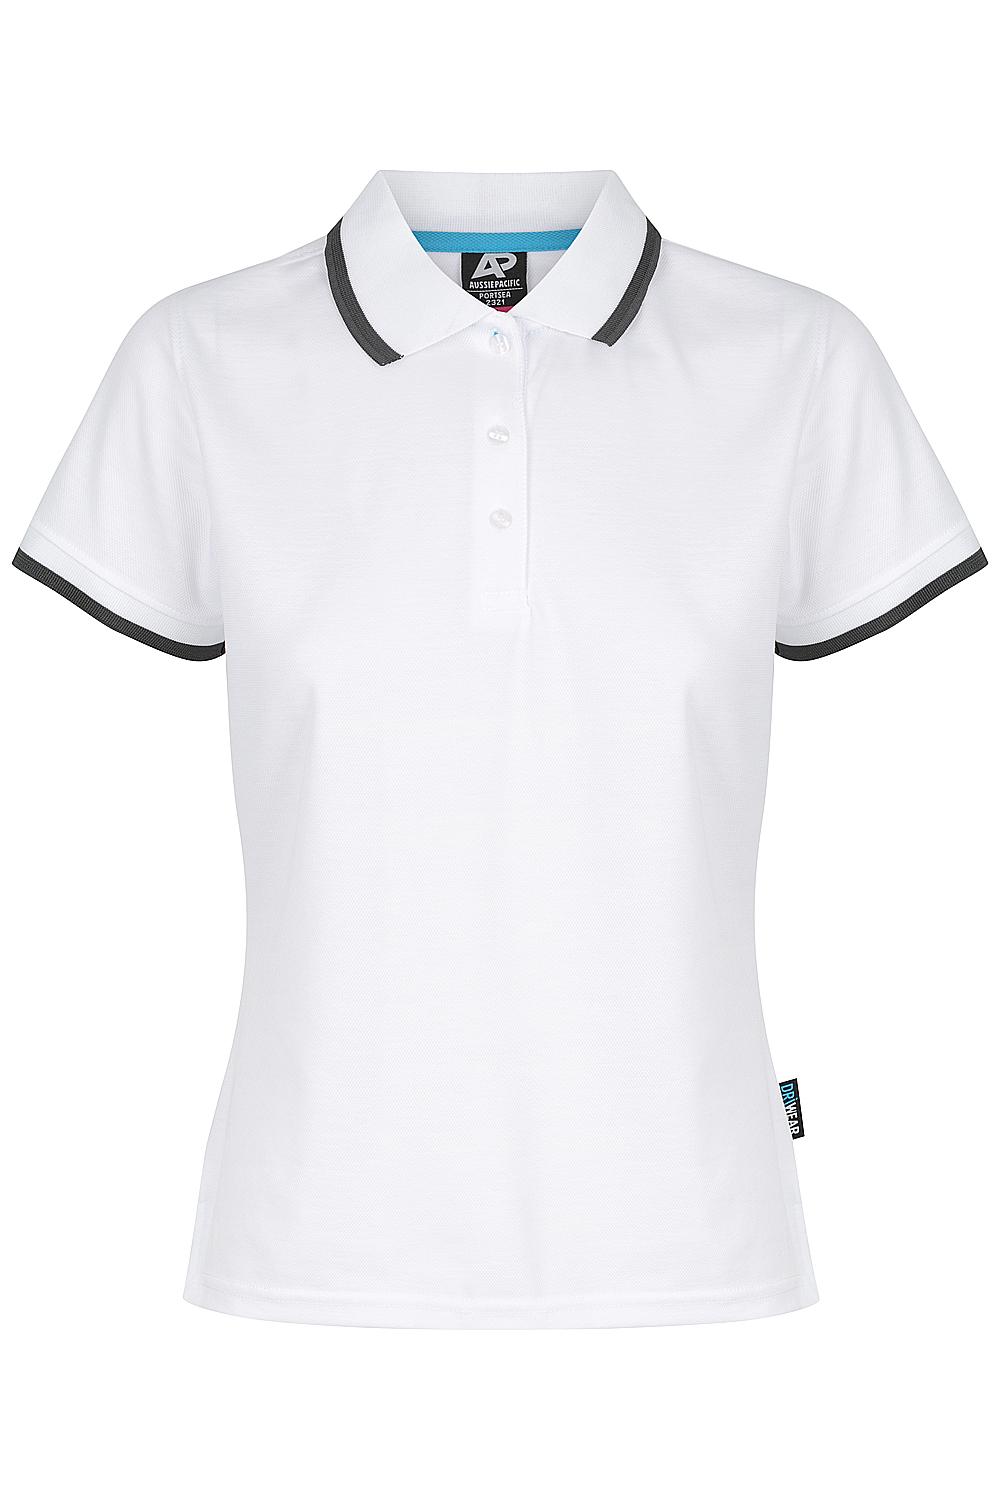 Custom Ladies Portsea Work Shirts - White/Slate